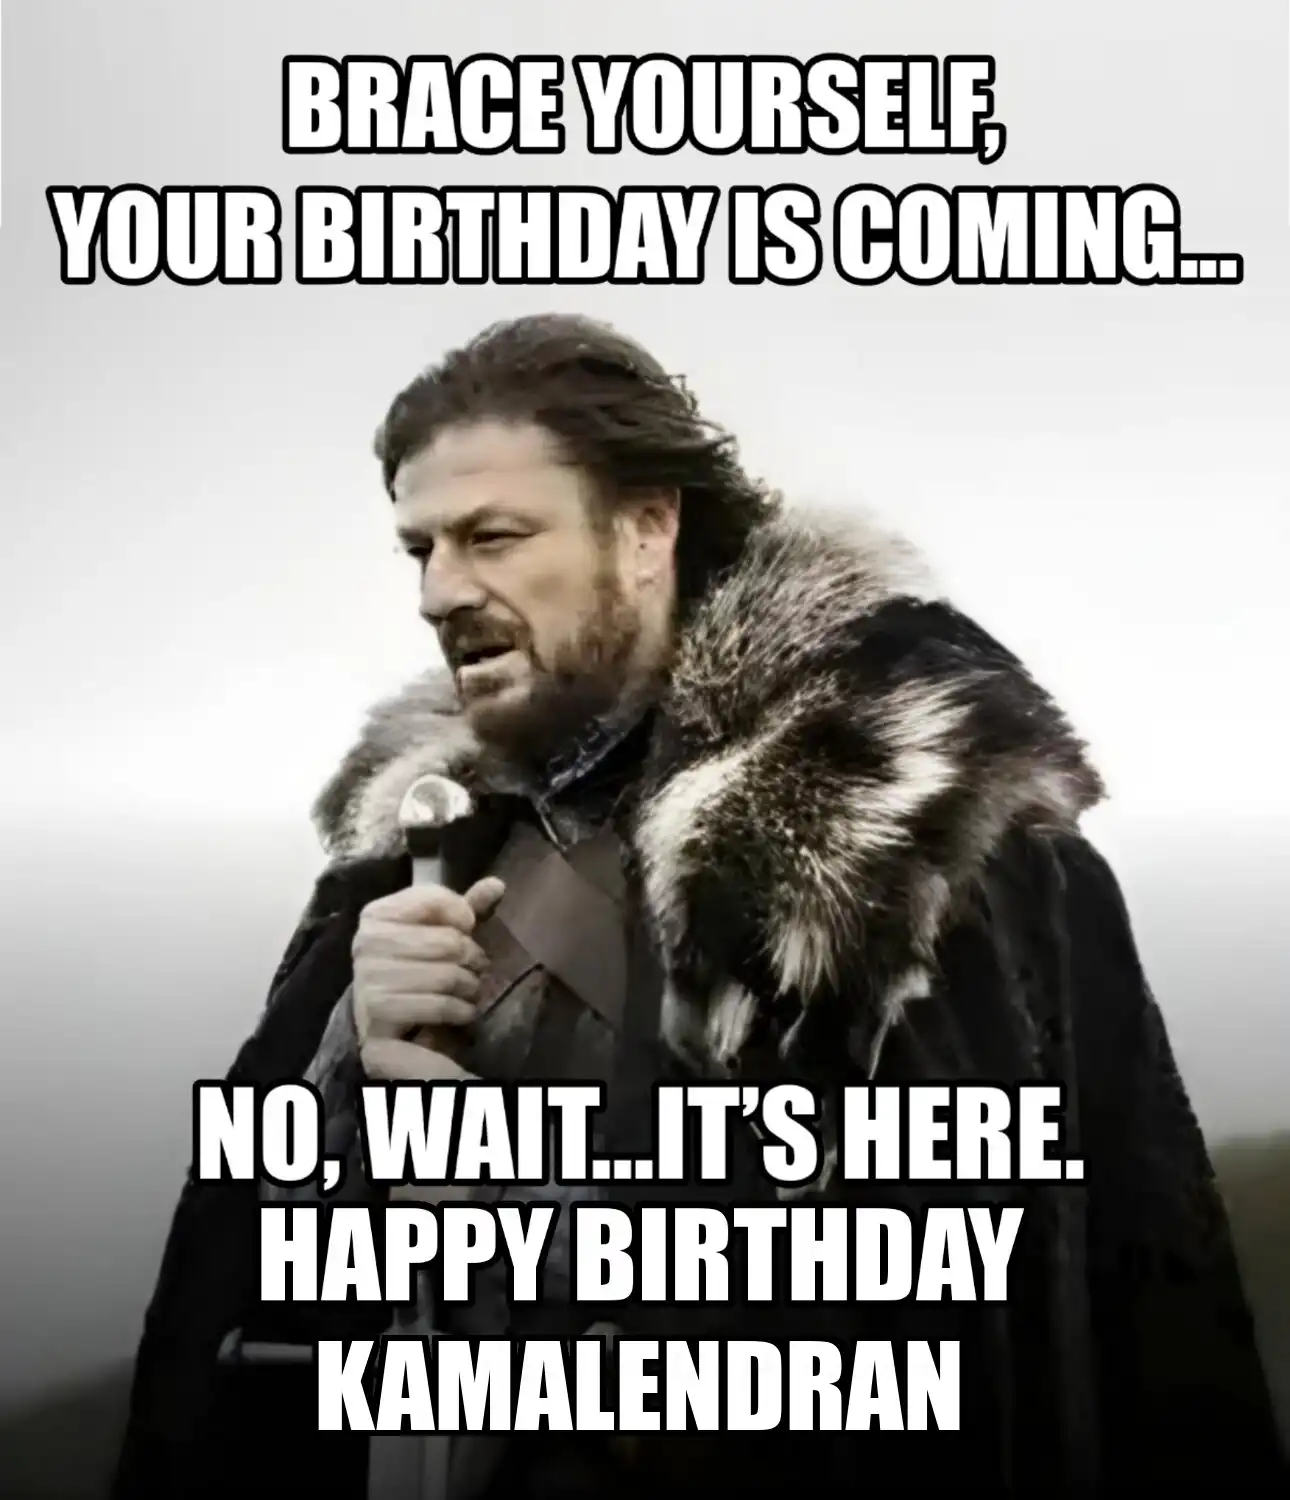 Happy Birthday Kamalendran Brace Yourself Your Birthday Is Coming Meme